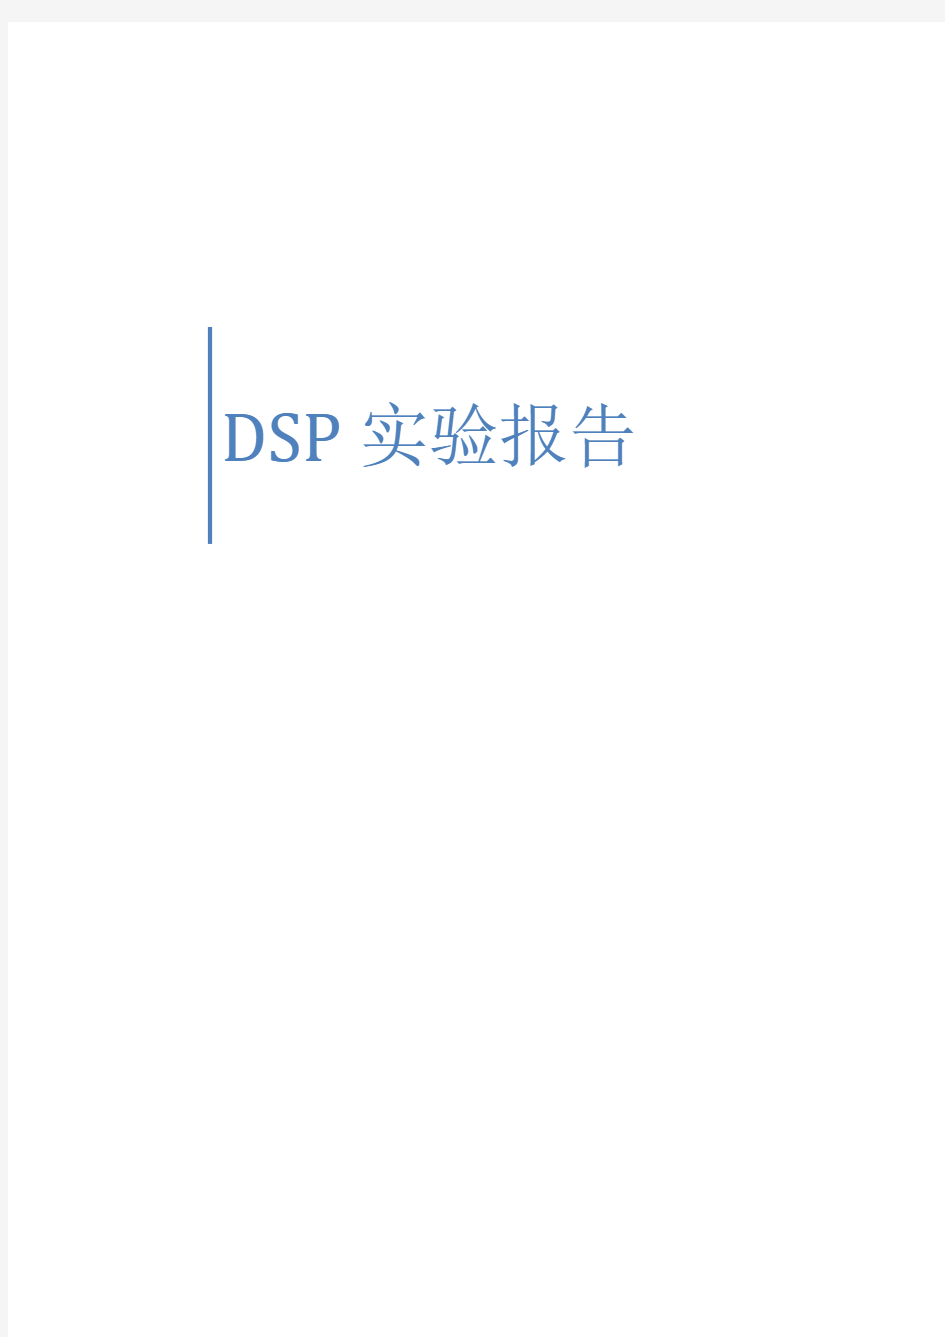 DSP实验报告 作业